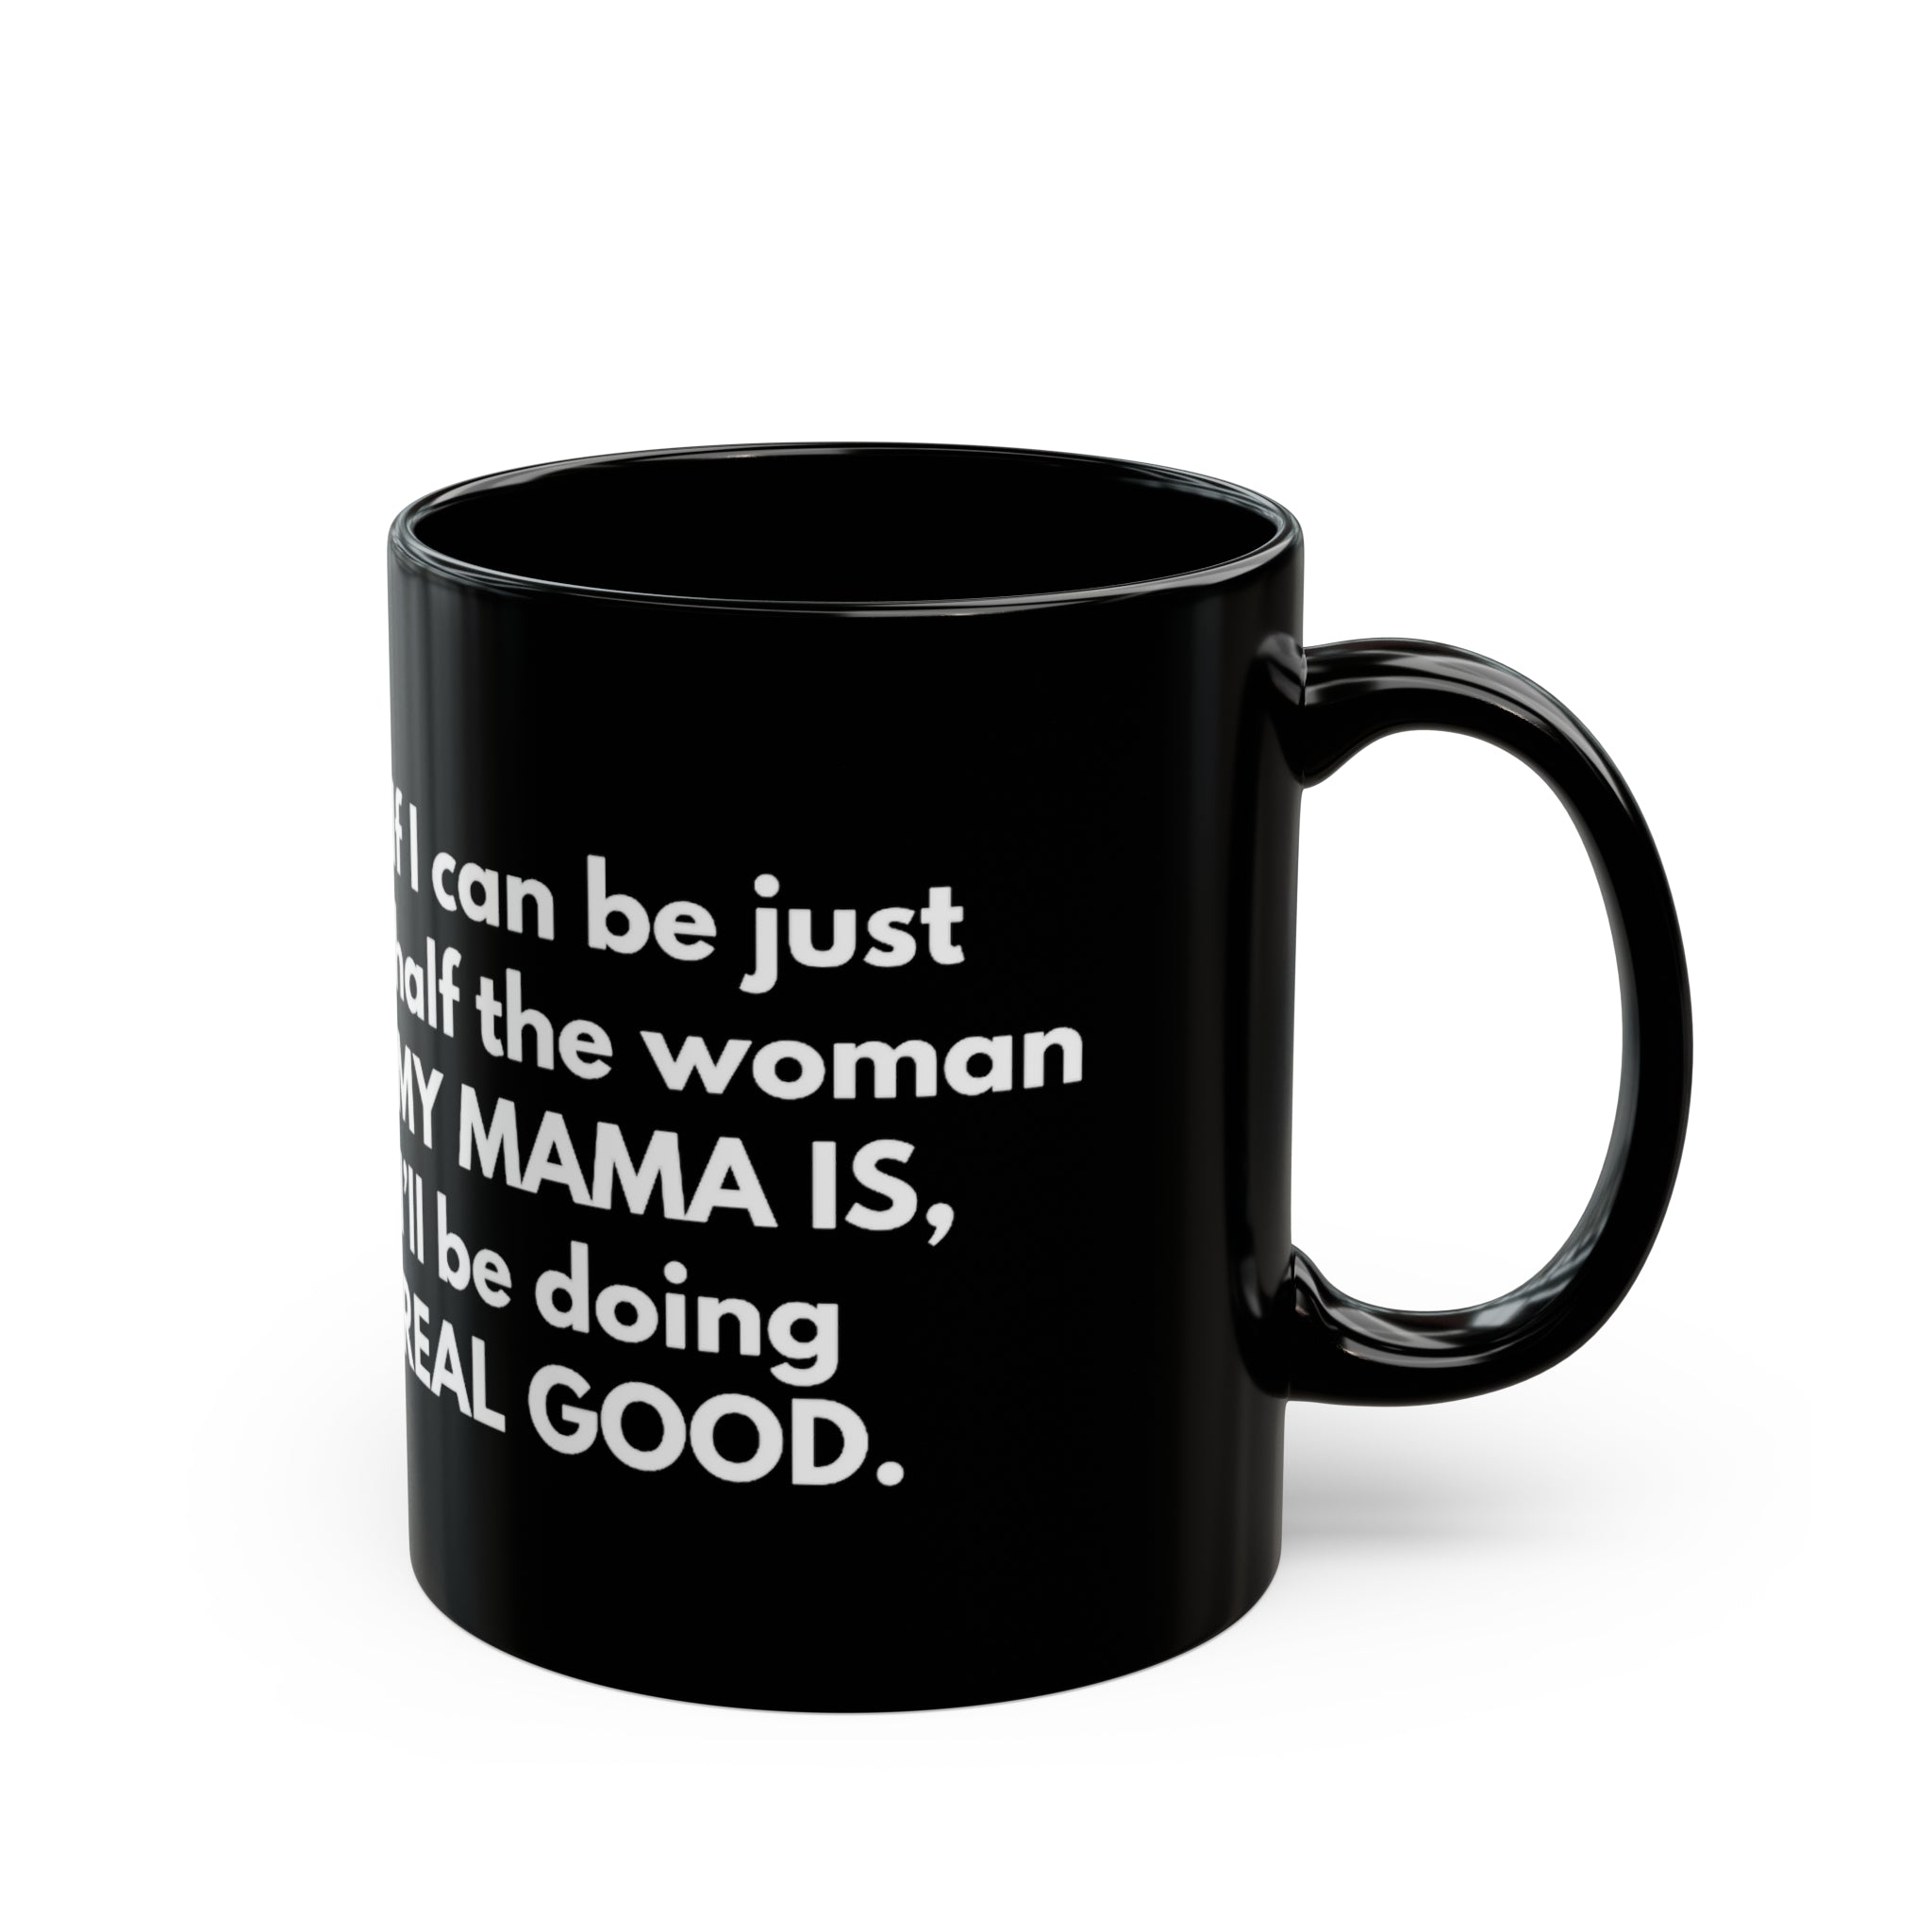 My Mama Is Mug 11oz